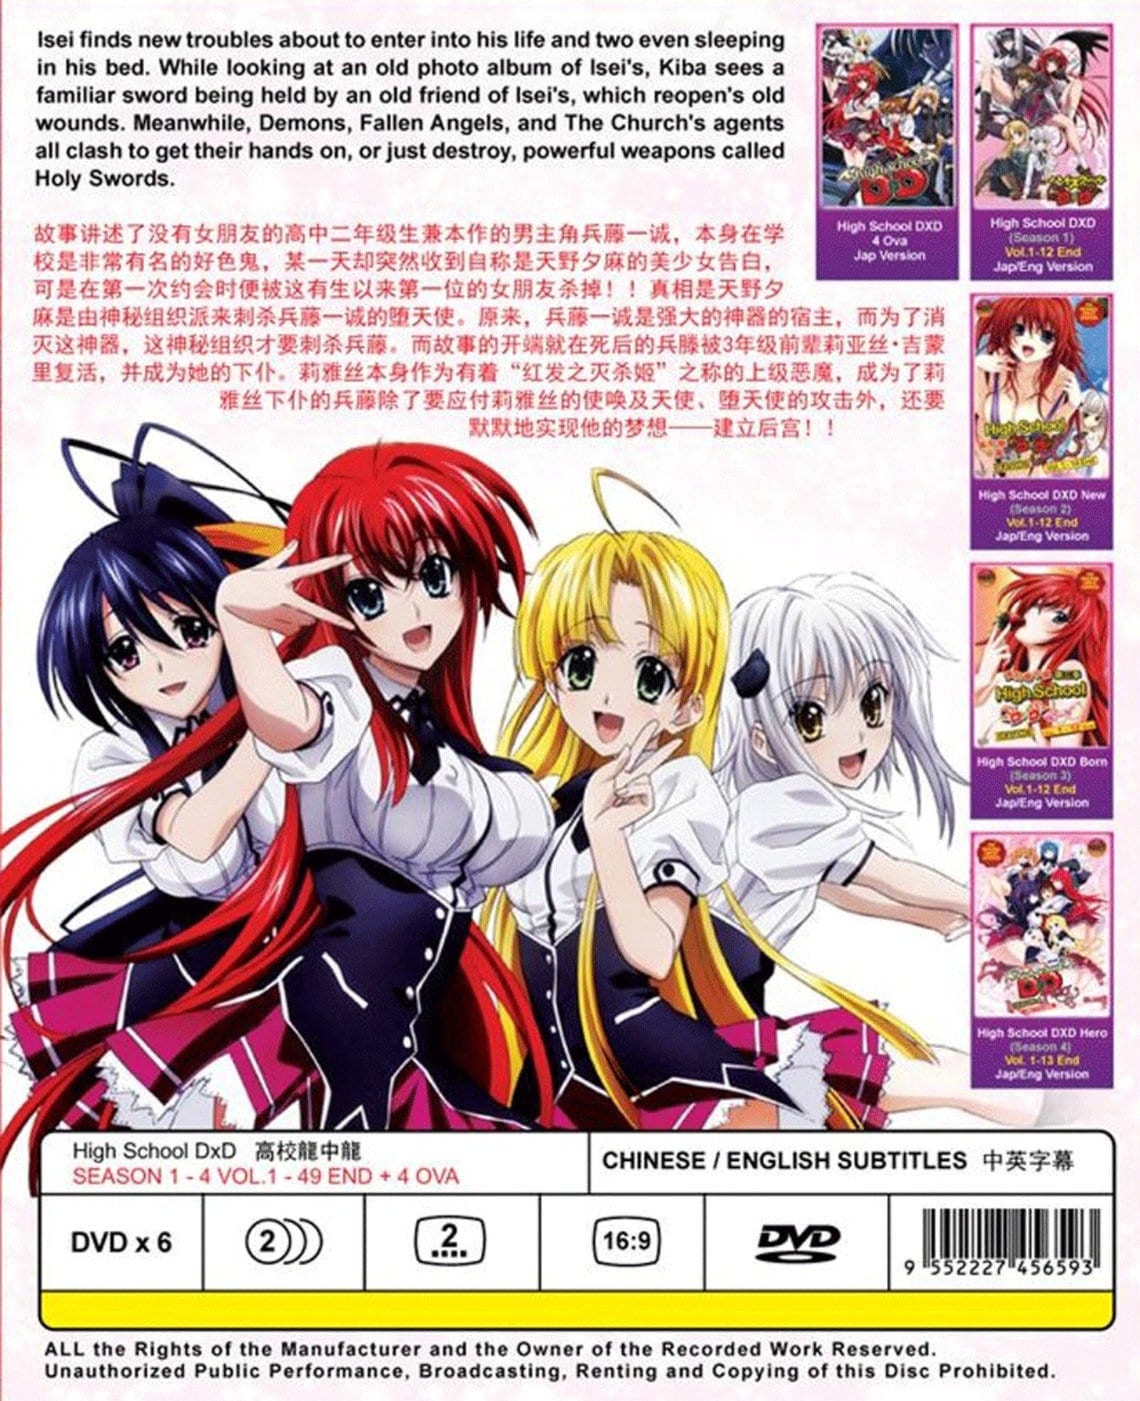 HIGH SCHOOL DXD : Season 3  Collection (DVD, 2015) - Region 4 AUS - Anime  $37.90 - PicClick AU